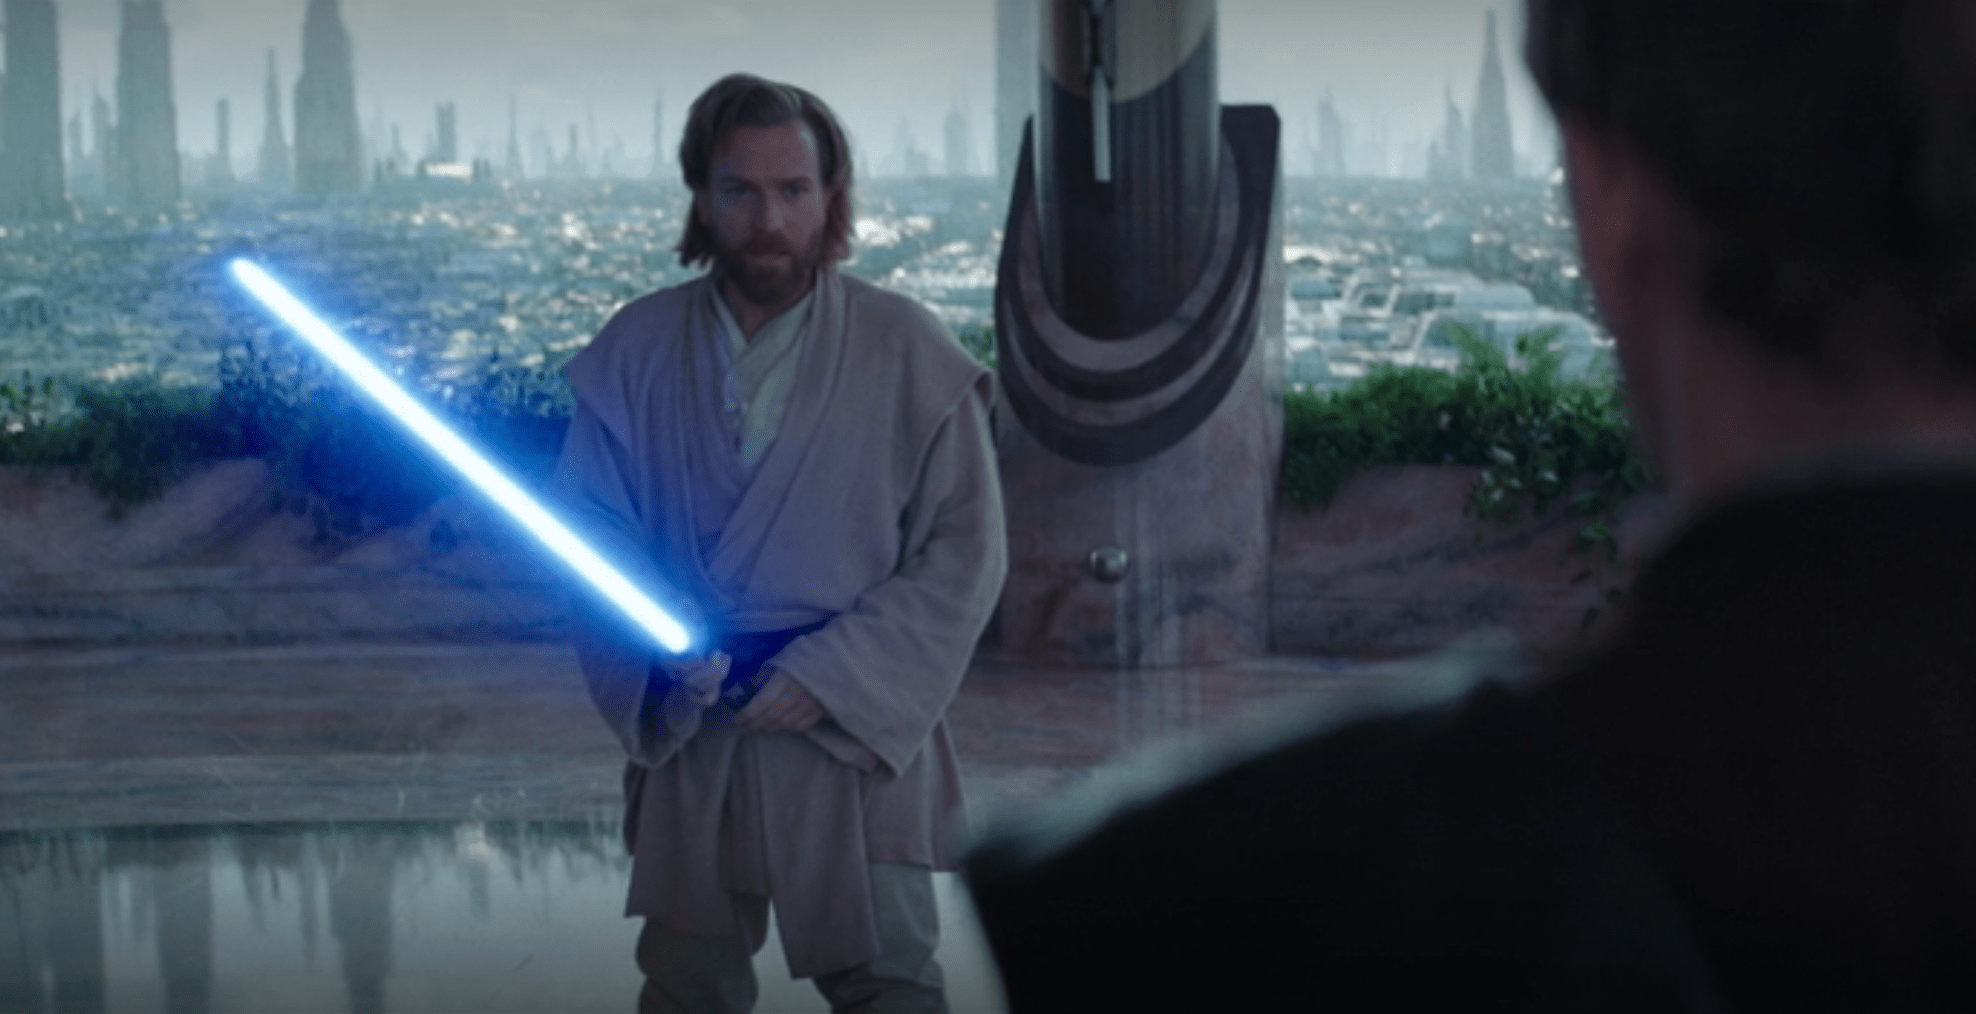 ‘Obi-Wan Kenobi’ S1E5 'Part 5' has a twist and lightsaber duels too